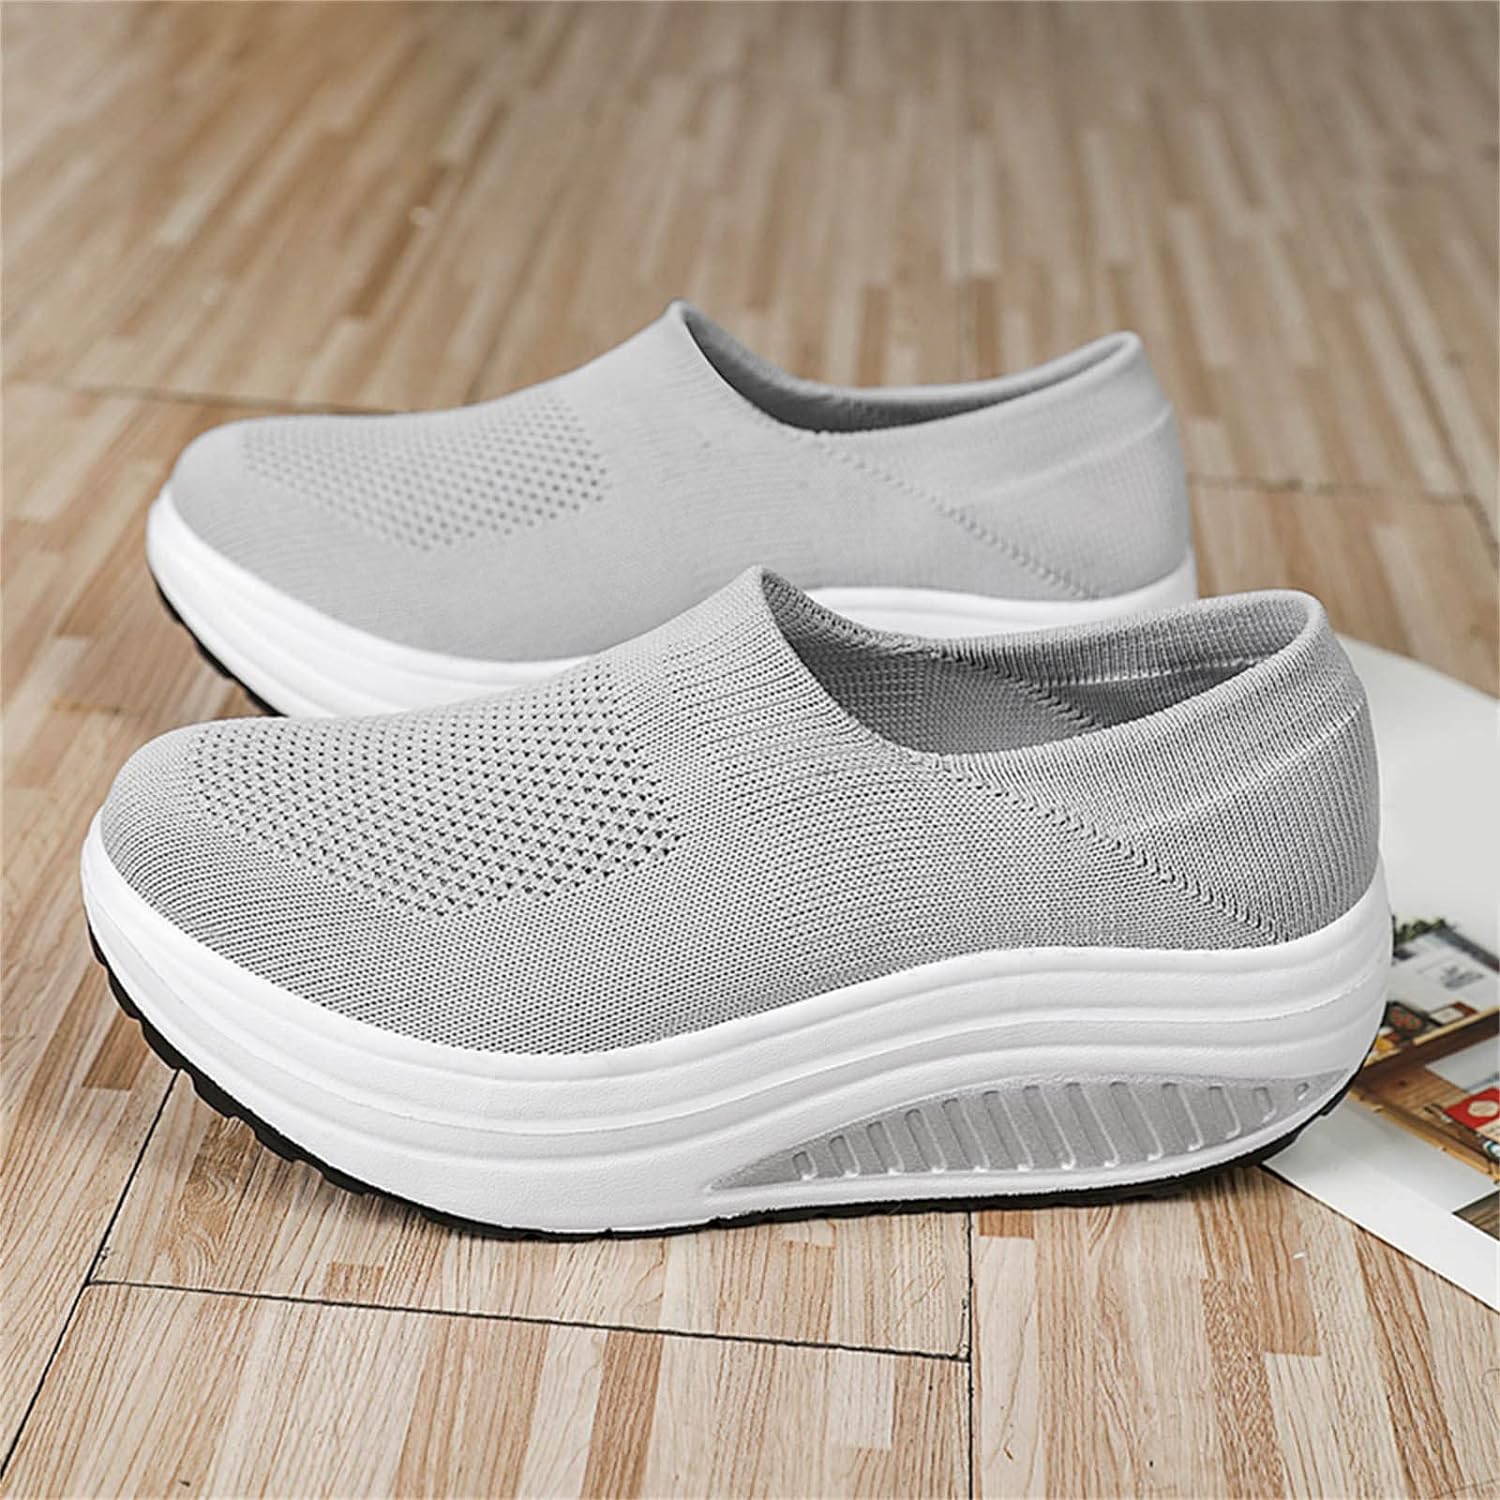 GS Slides | Flip Flop sneakers voor dames met orthopedisch voetbed